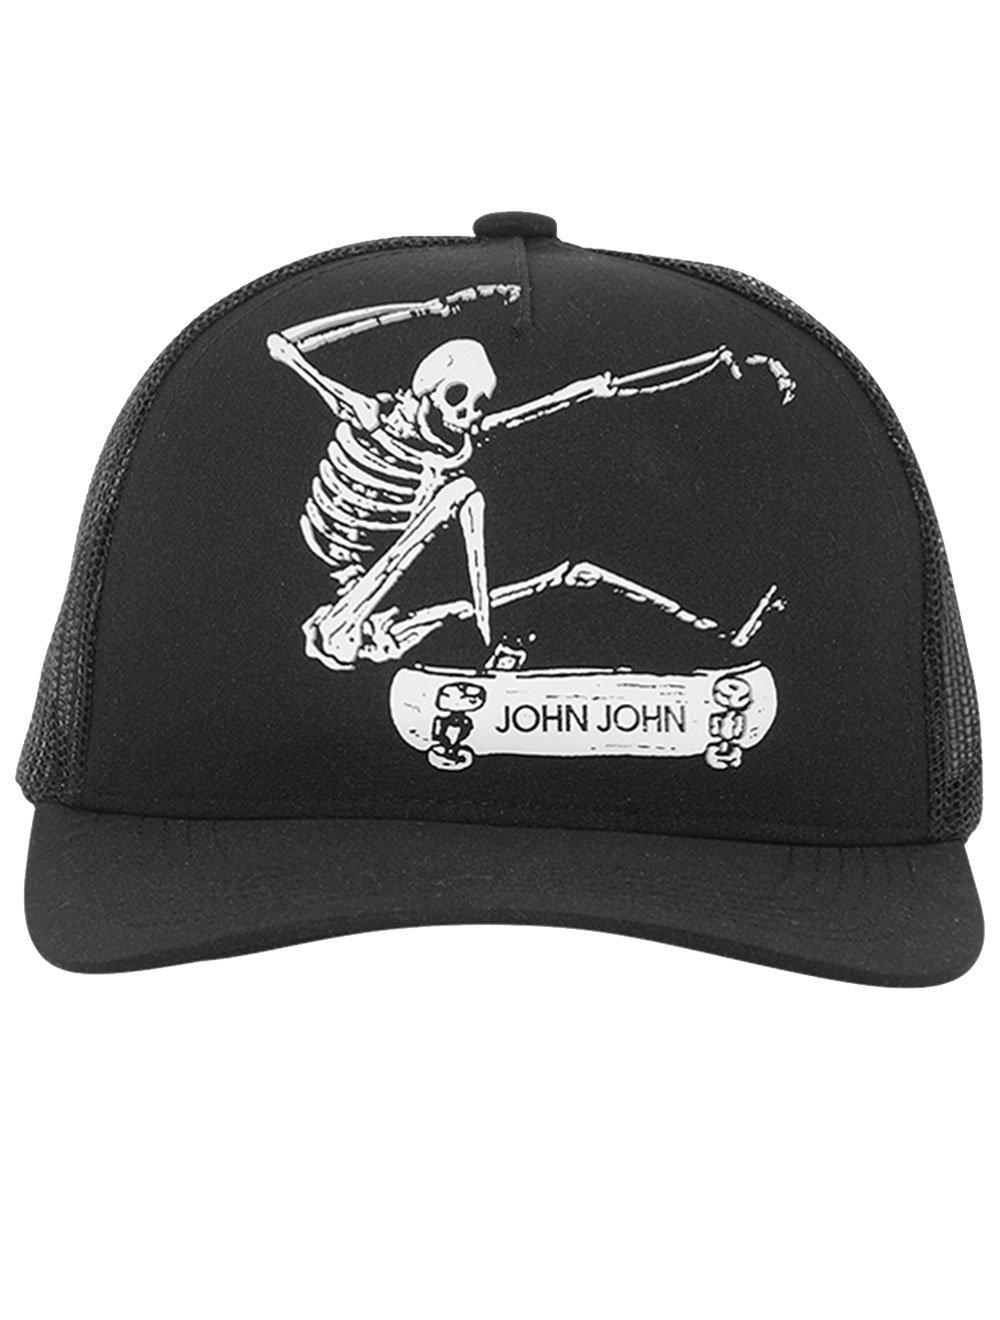 Skull and Bones fica indisponível para pré-venda na PS Store - NerdBunker